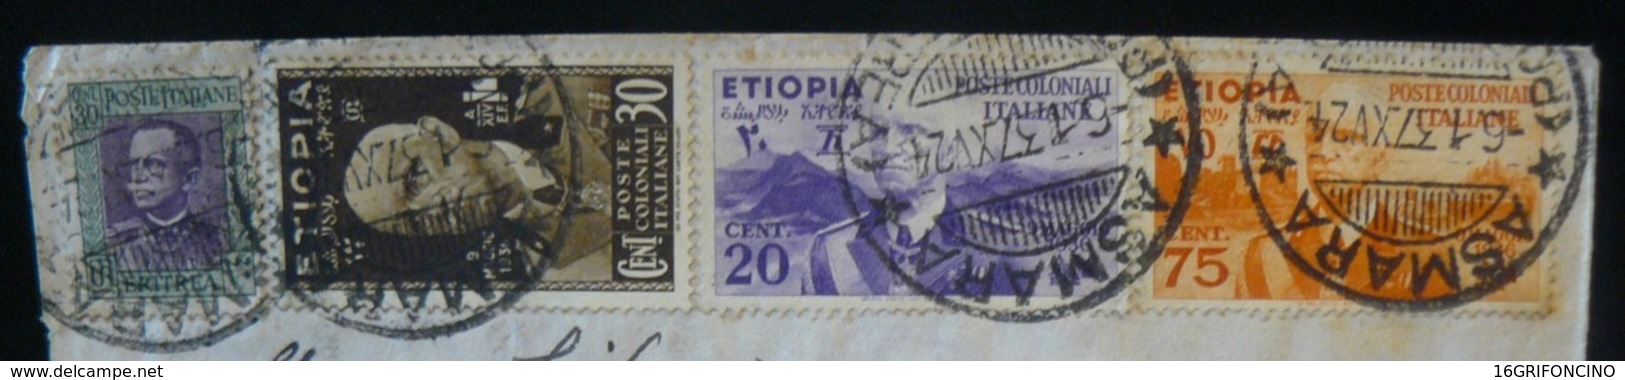 ETIOPIA  1937 - LETTERA VIAGGIATA DA ASMARA X VIGNOLA ( MODENA ) CON FRANCOBOLLI DI ALTO VALORE - Ethiopie